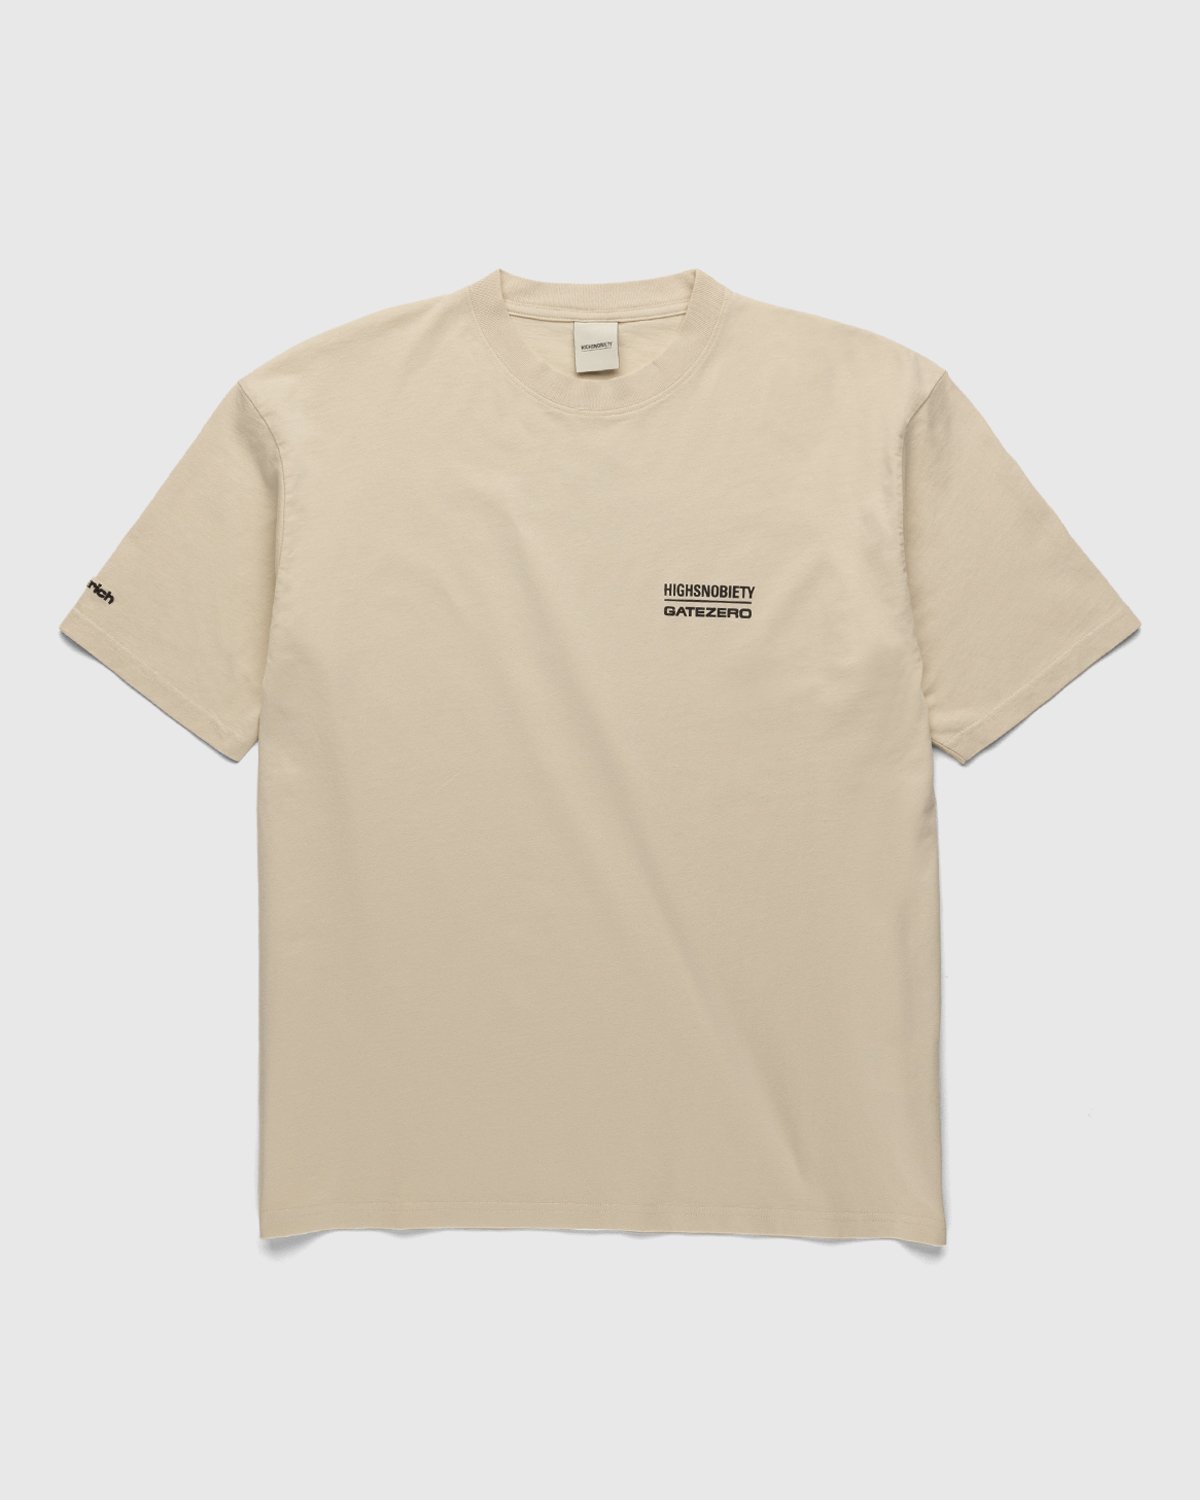 Highsnobiety - GATEZERO City Series 1 T-Shirt Eggshell - Clothing - White - Image 2